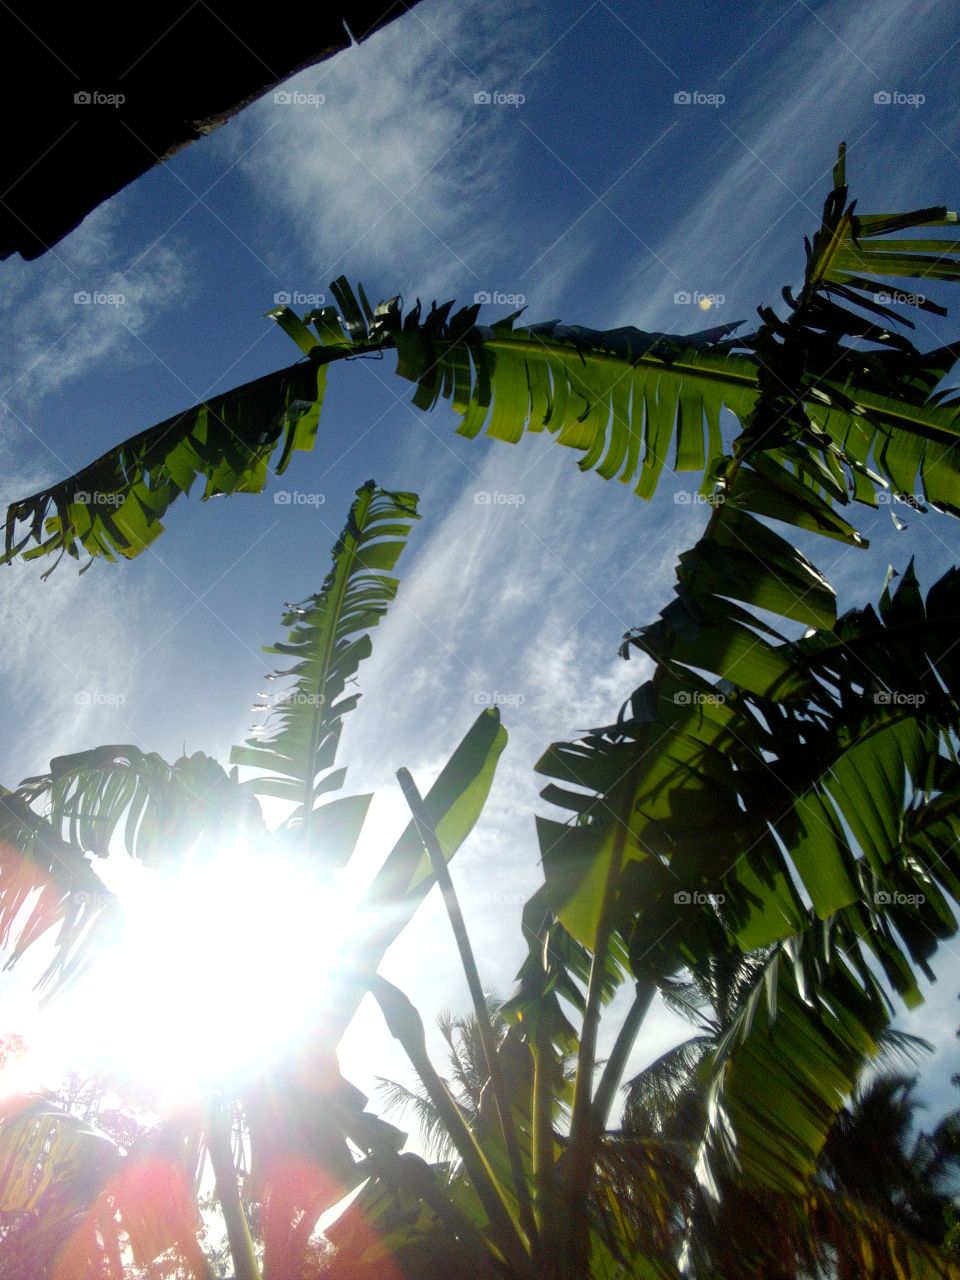 shiney sun through the banana leaves.empty sky above those